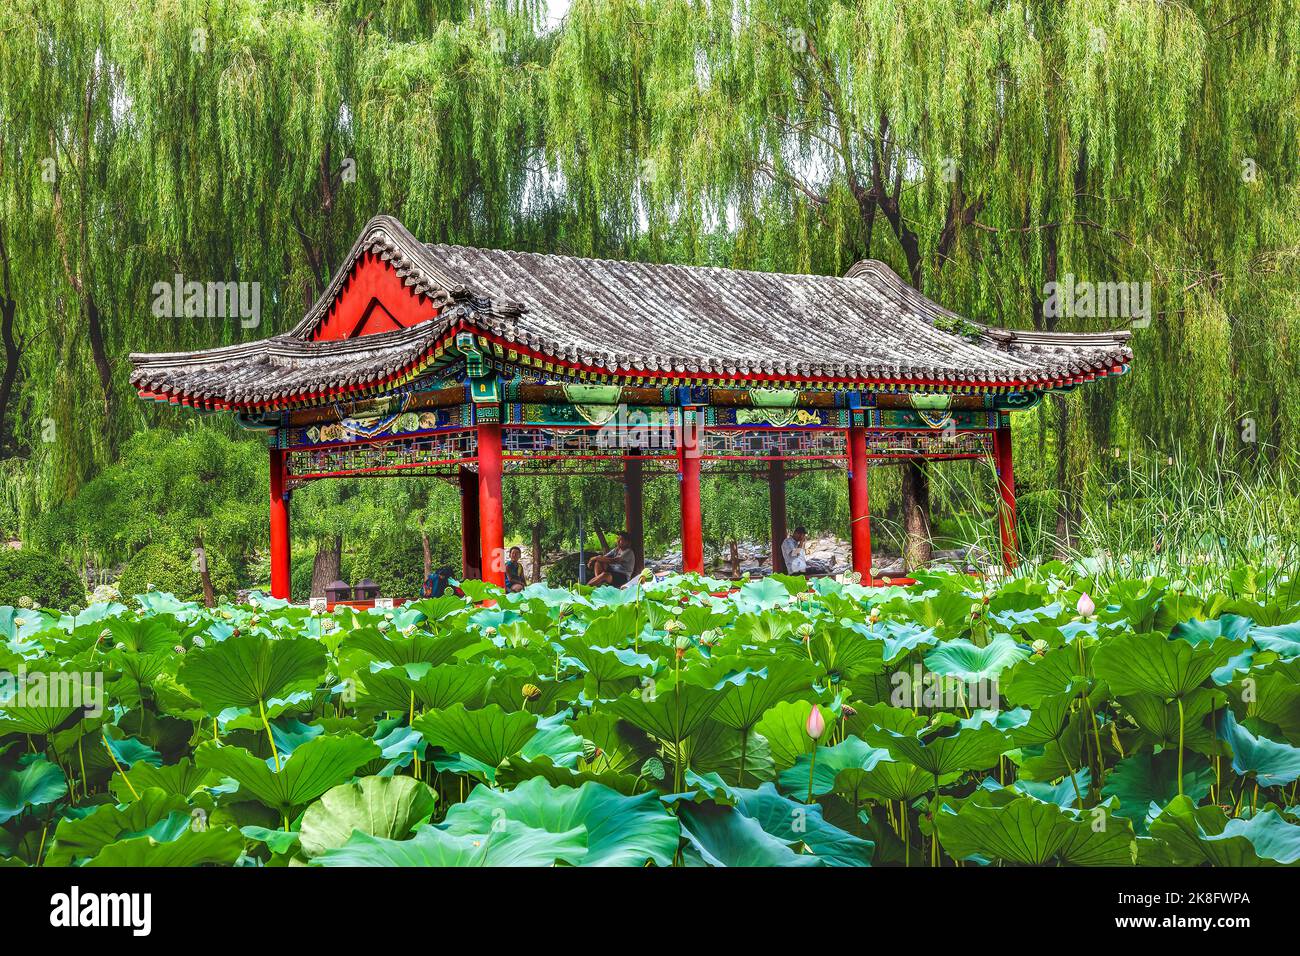 Red Pavilion Lotus Garden Temple of Sun Ritan City Park, Beijing China Willow Green Trees Stock Photo